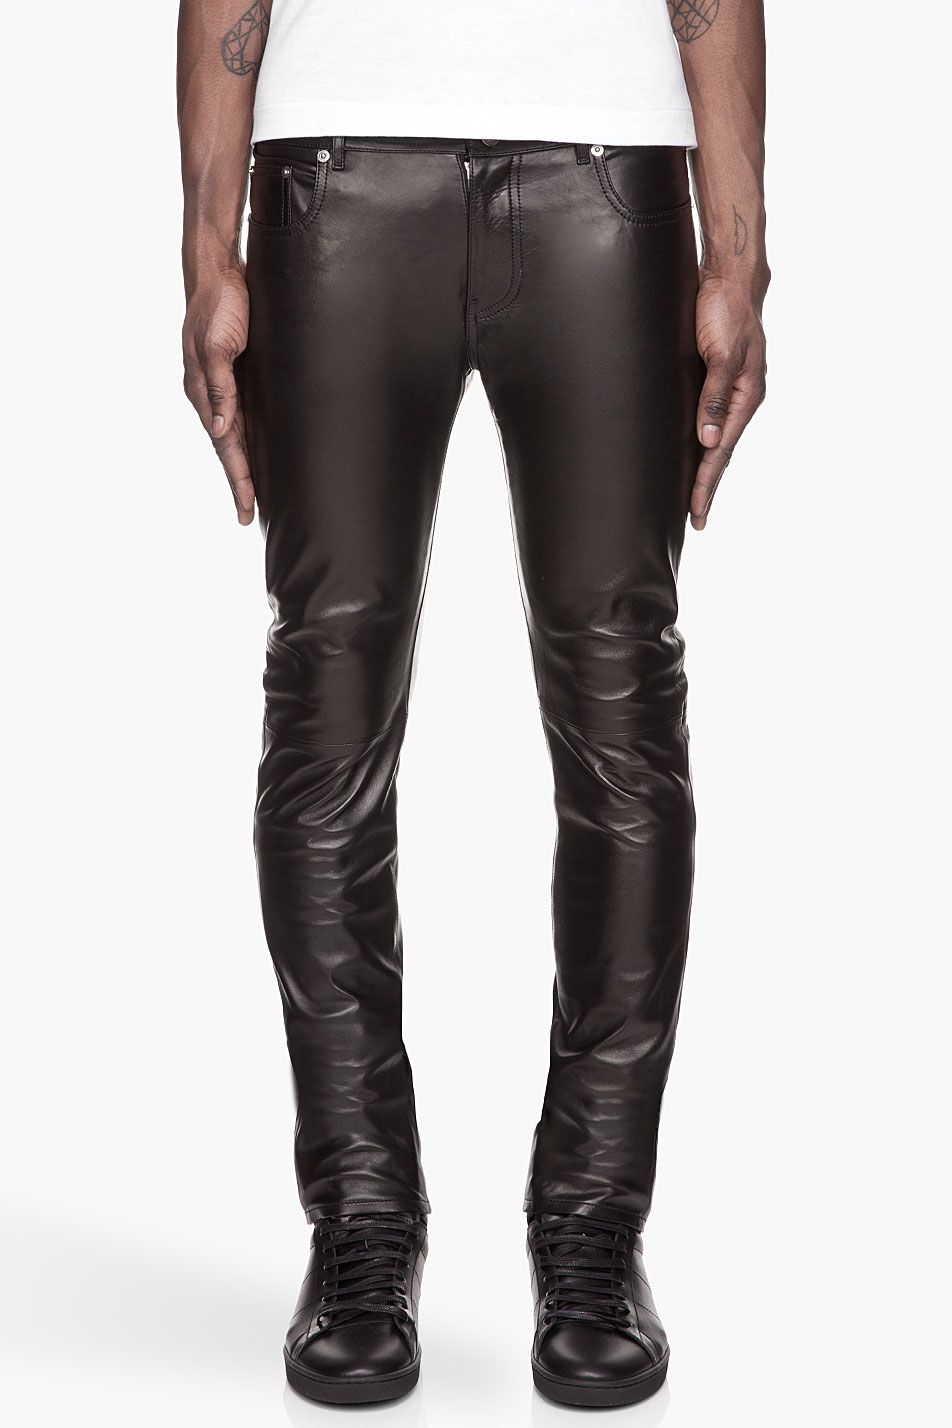 Lyst - Saint Laurent Black Buffed Leather Pants in Black for Men